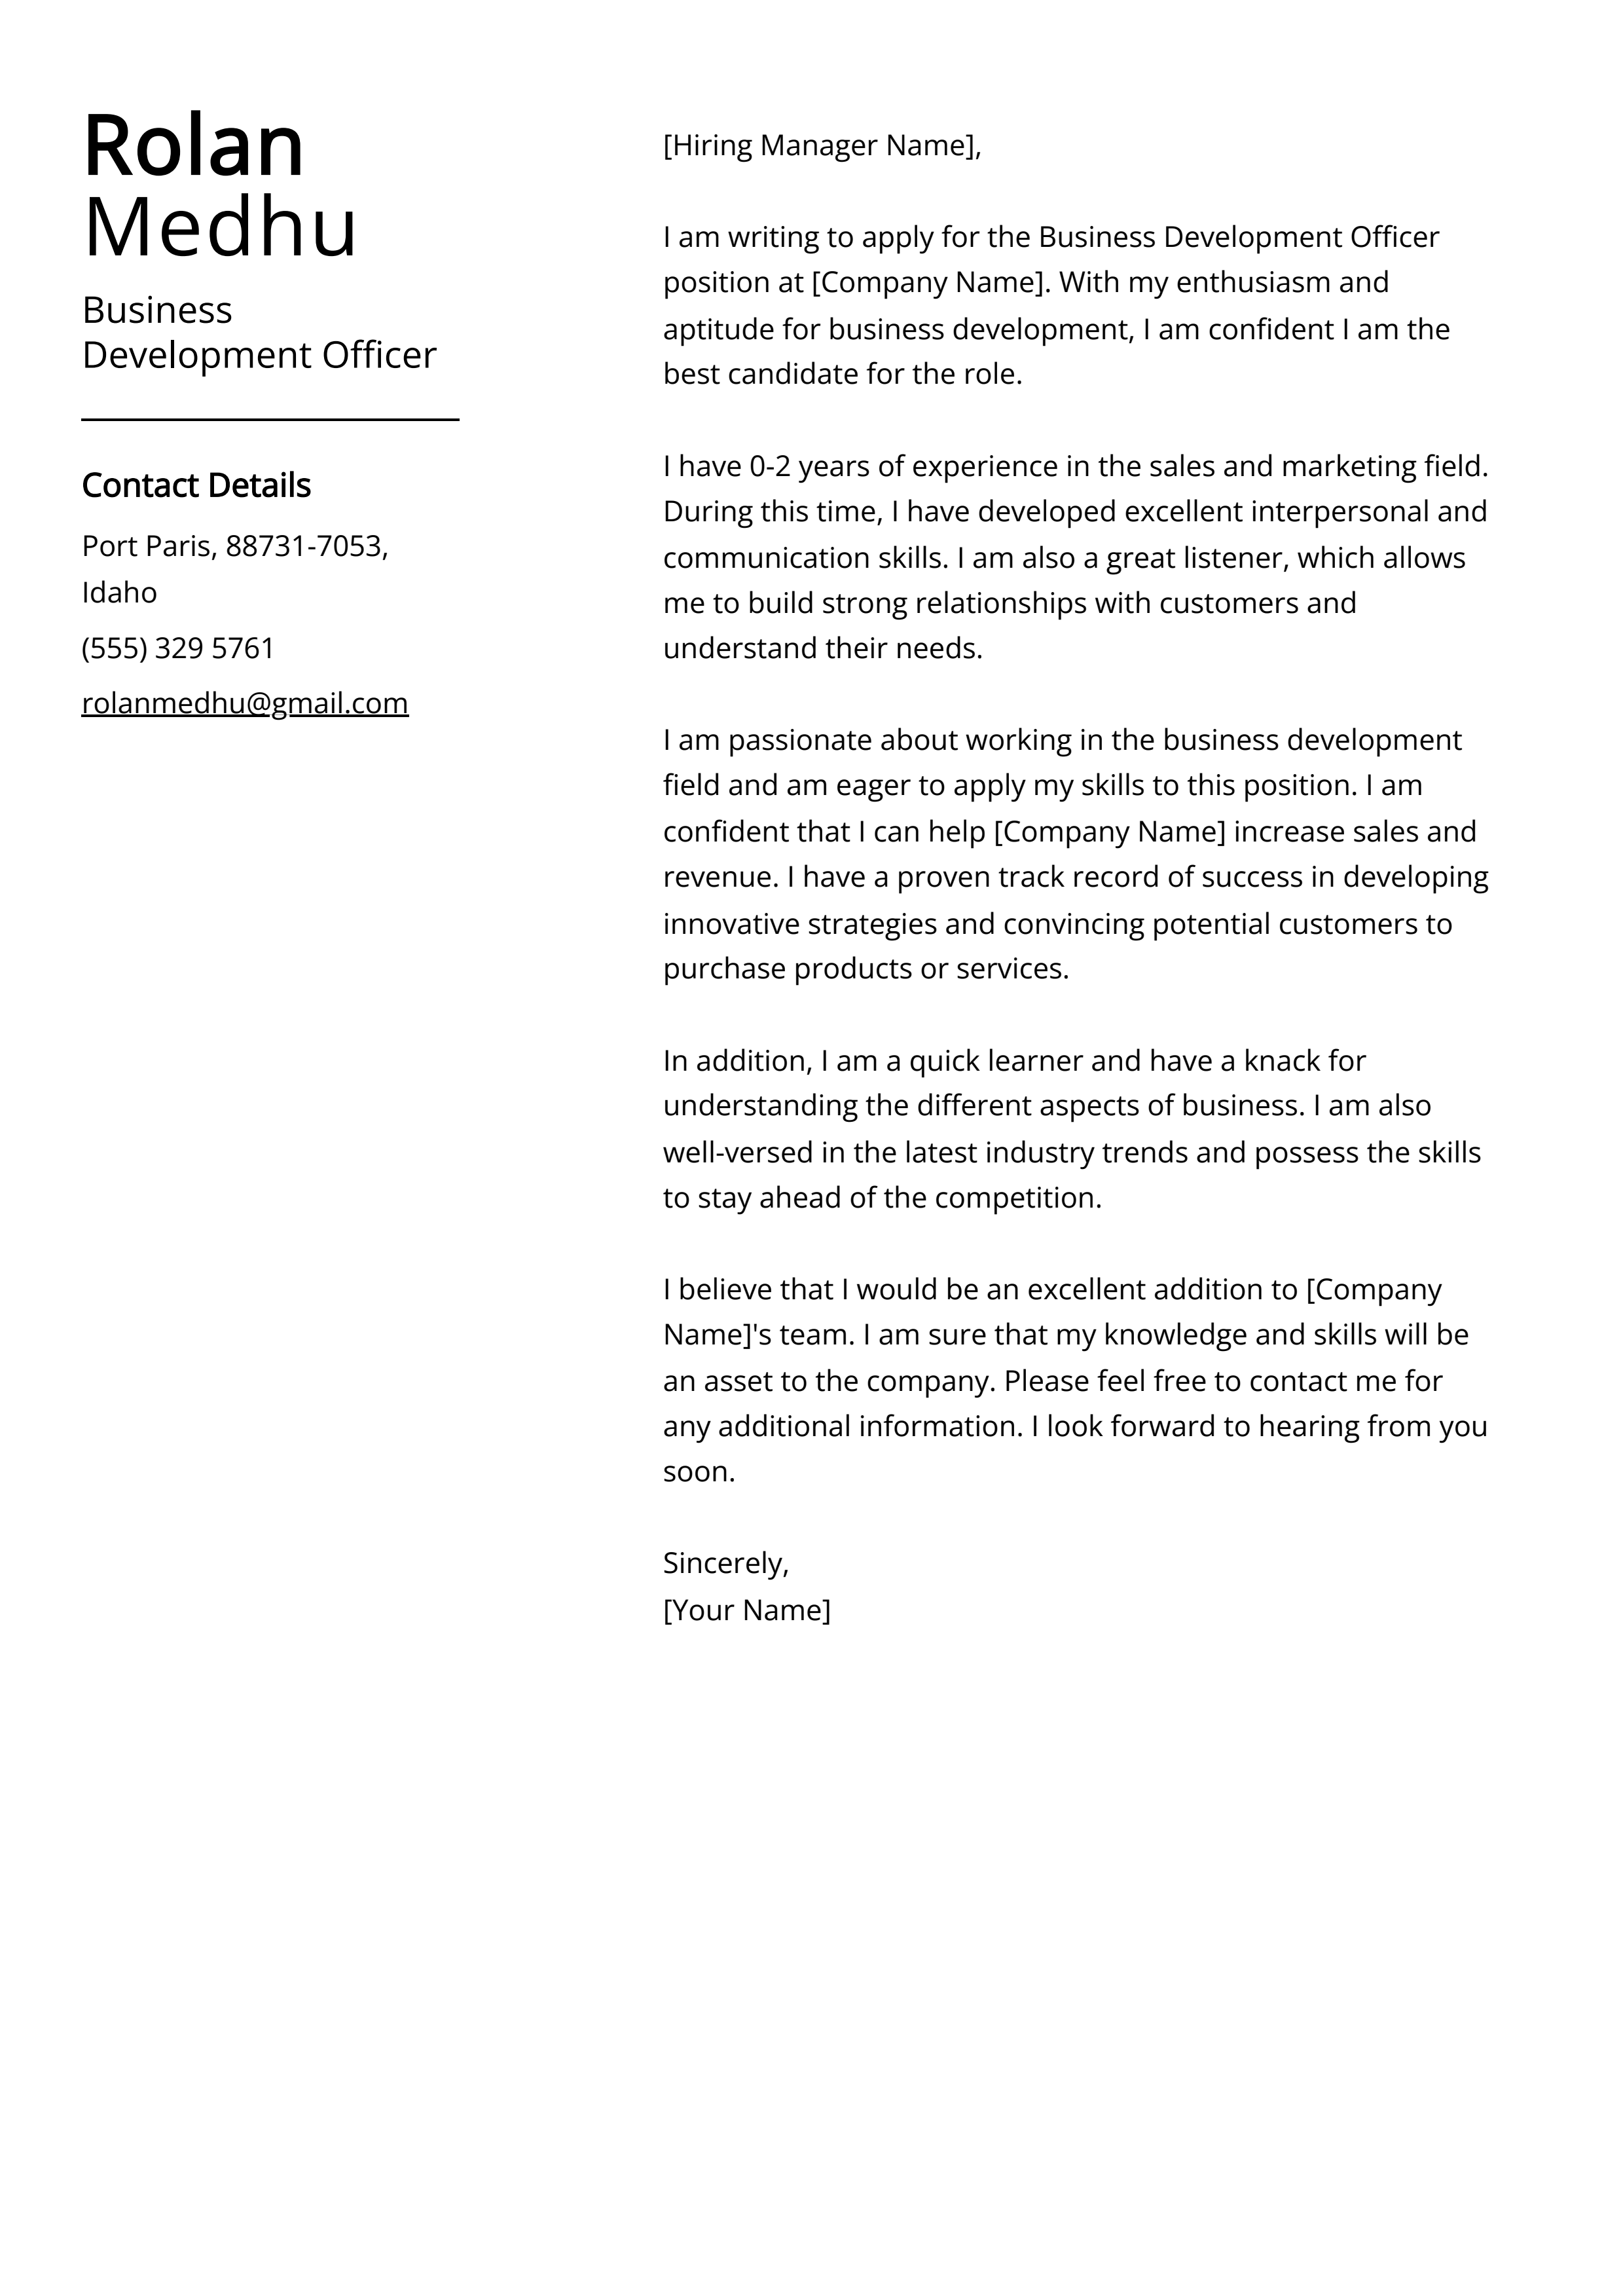 Business Development Officer Cover Letter Example